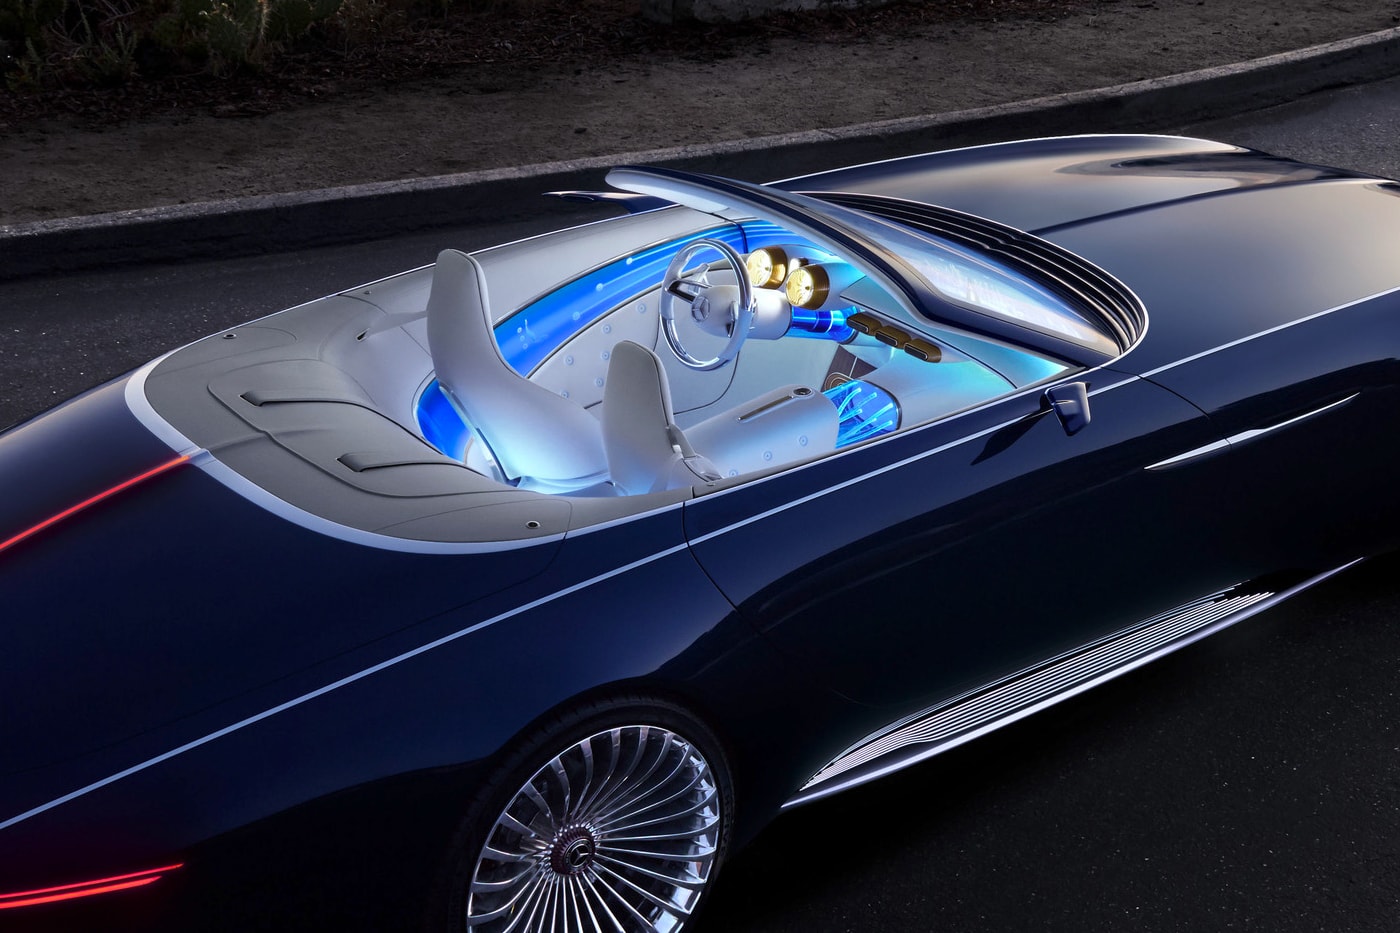 dc comics the flash Ezra Miller Michael Keaton bruce wayne Vision Mercedes-Maybach 6 Cabriolet news supercars concepts 